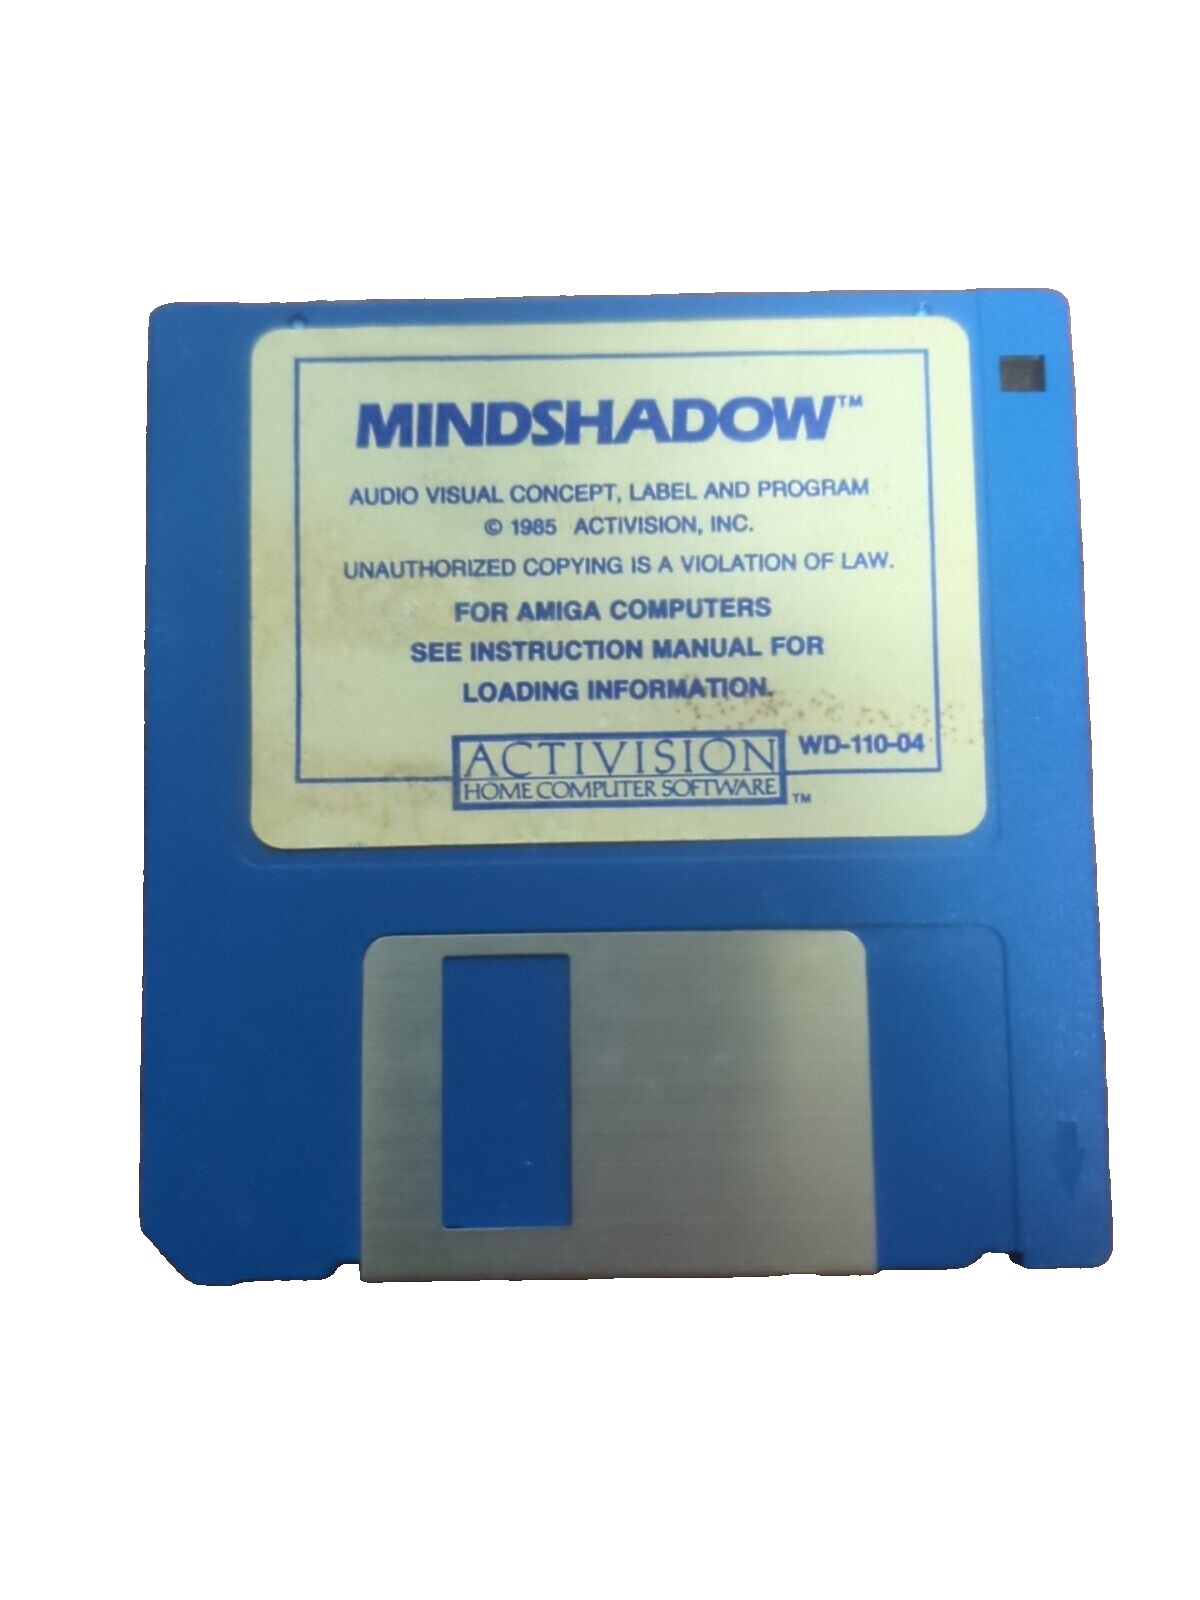 MINDSHADOW Commodore Amiga Video Game Floppy Discs 1985 Activision Untested